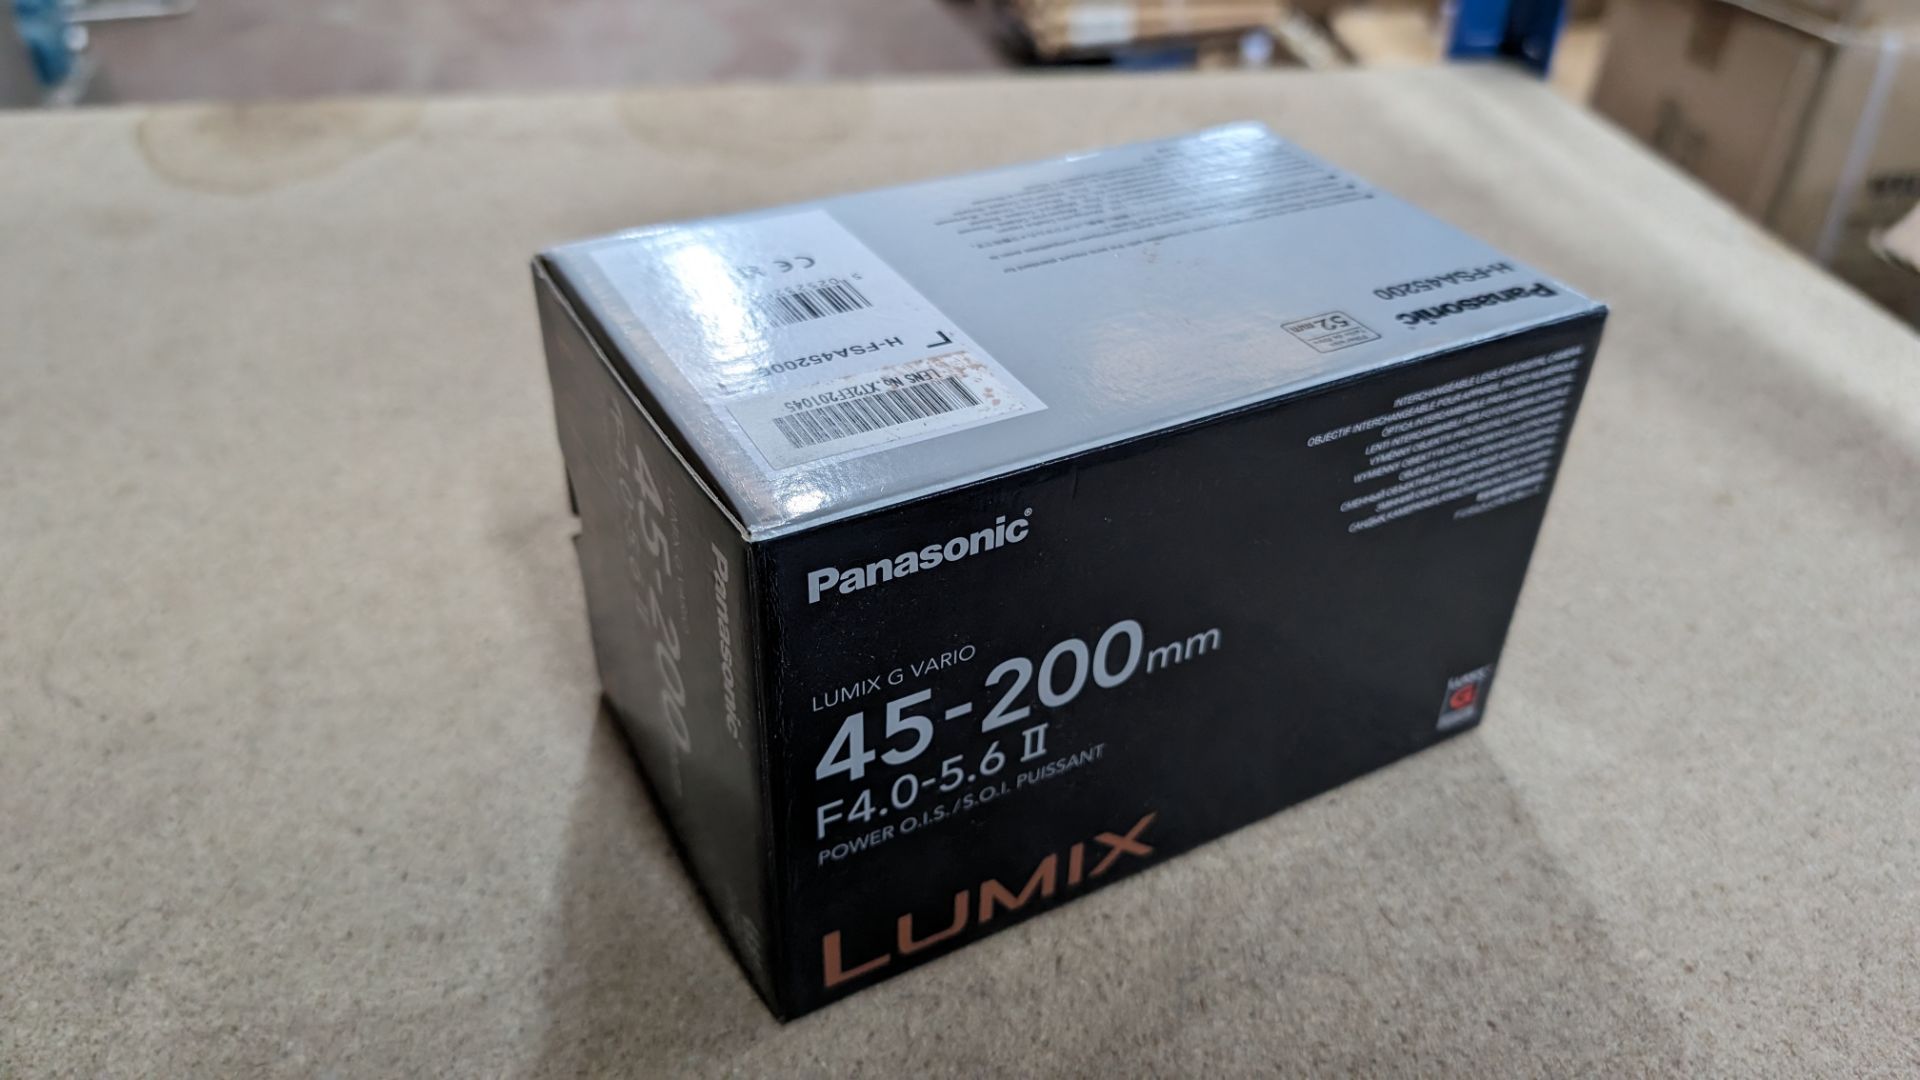 Panasonic Lumix G Vario 45-200mm lens, model H-FSA45200, f4.0-5.6 II - Image 3 of 5